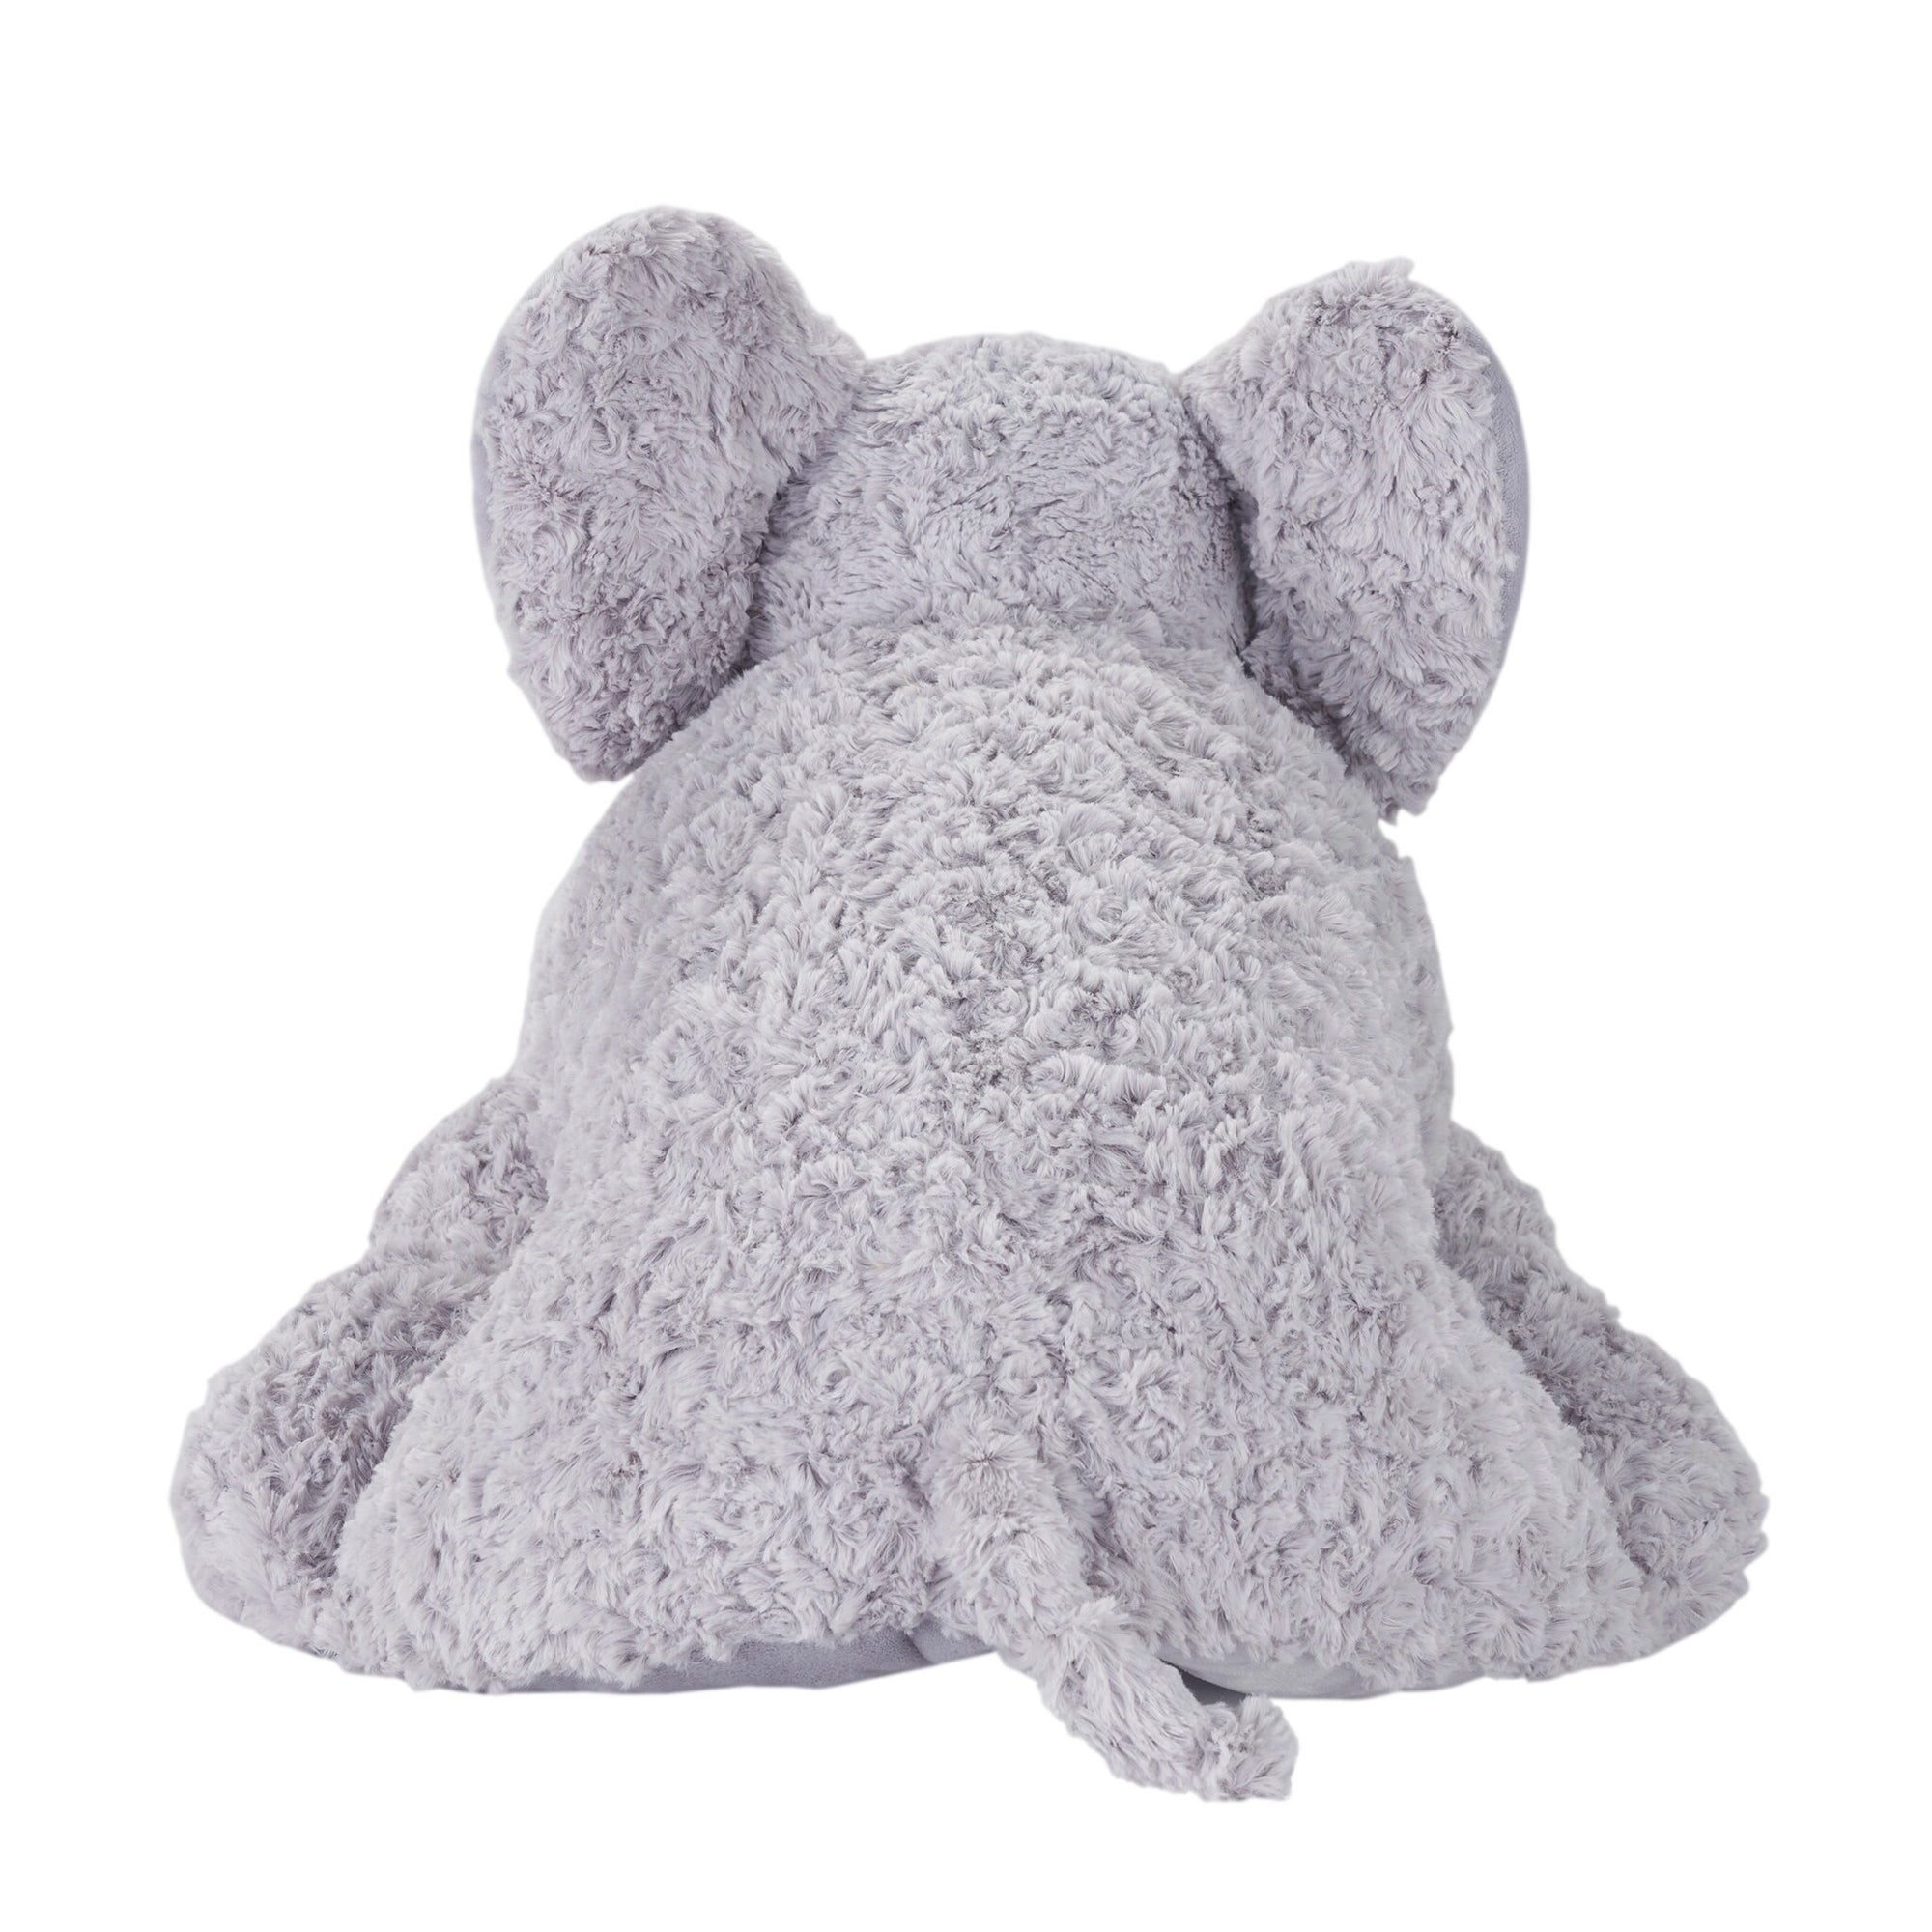 Eli the Grey Elephant Plush Animal Pillow